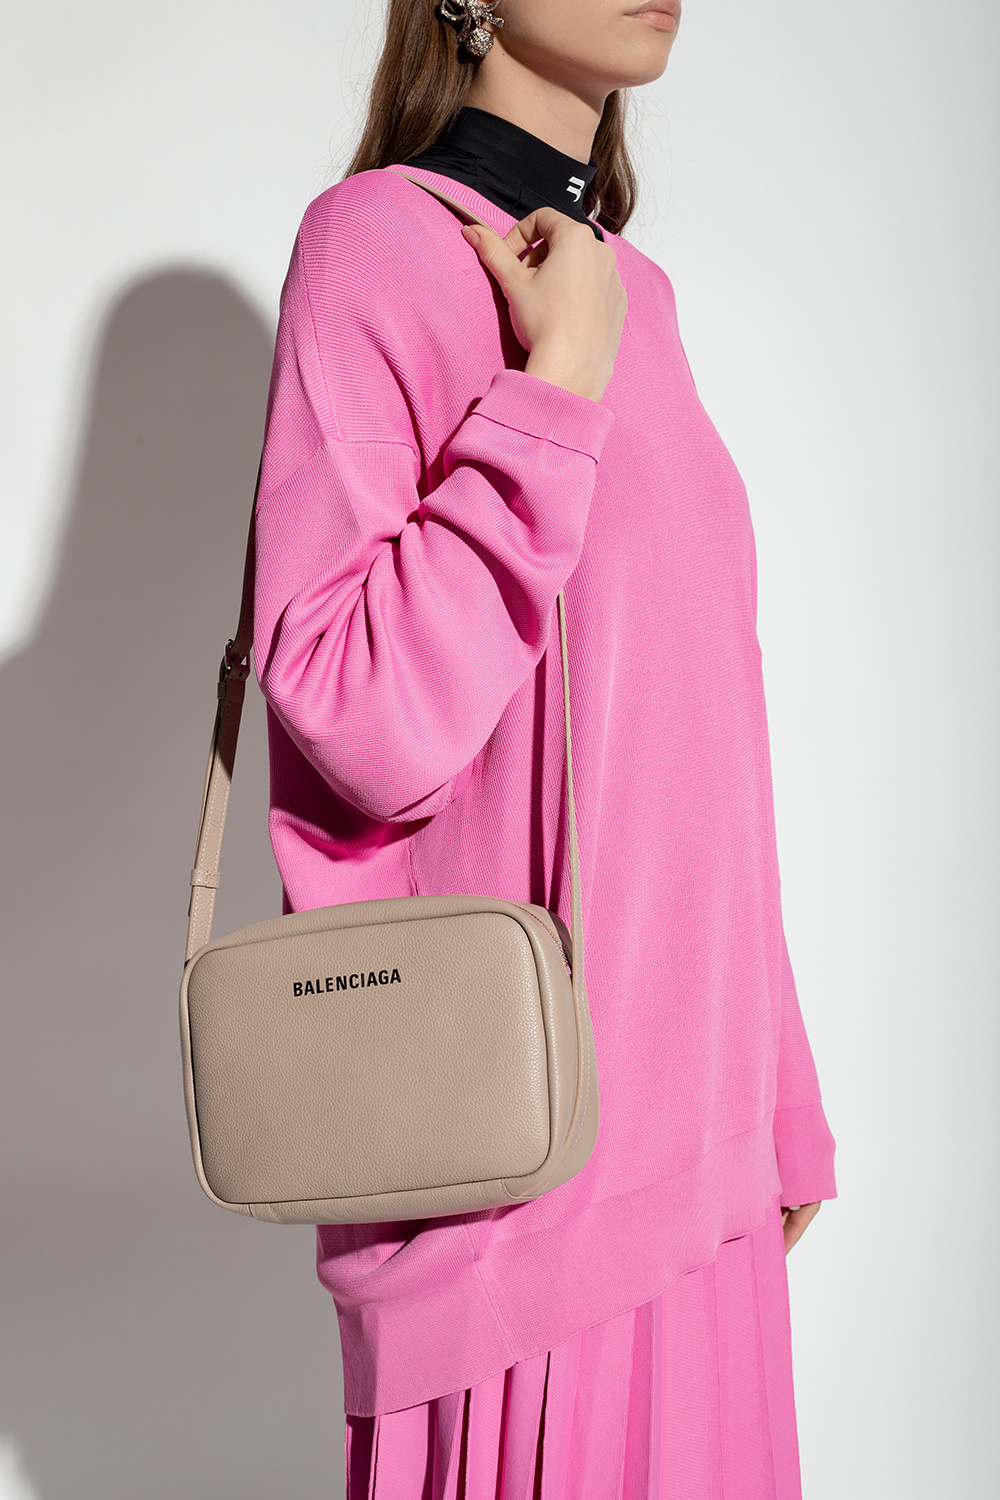 Balenciaga ‘Everyday Camera’ shoulder bag